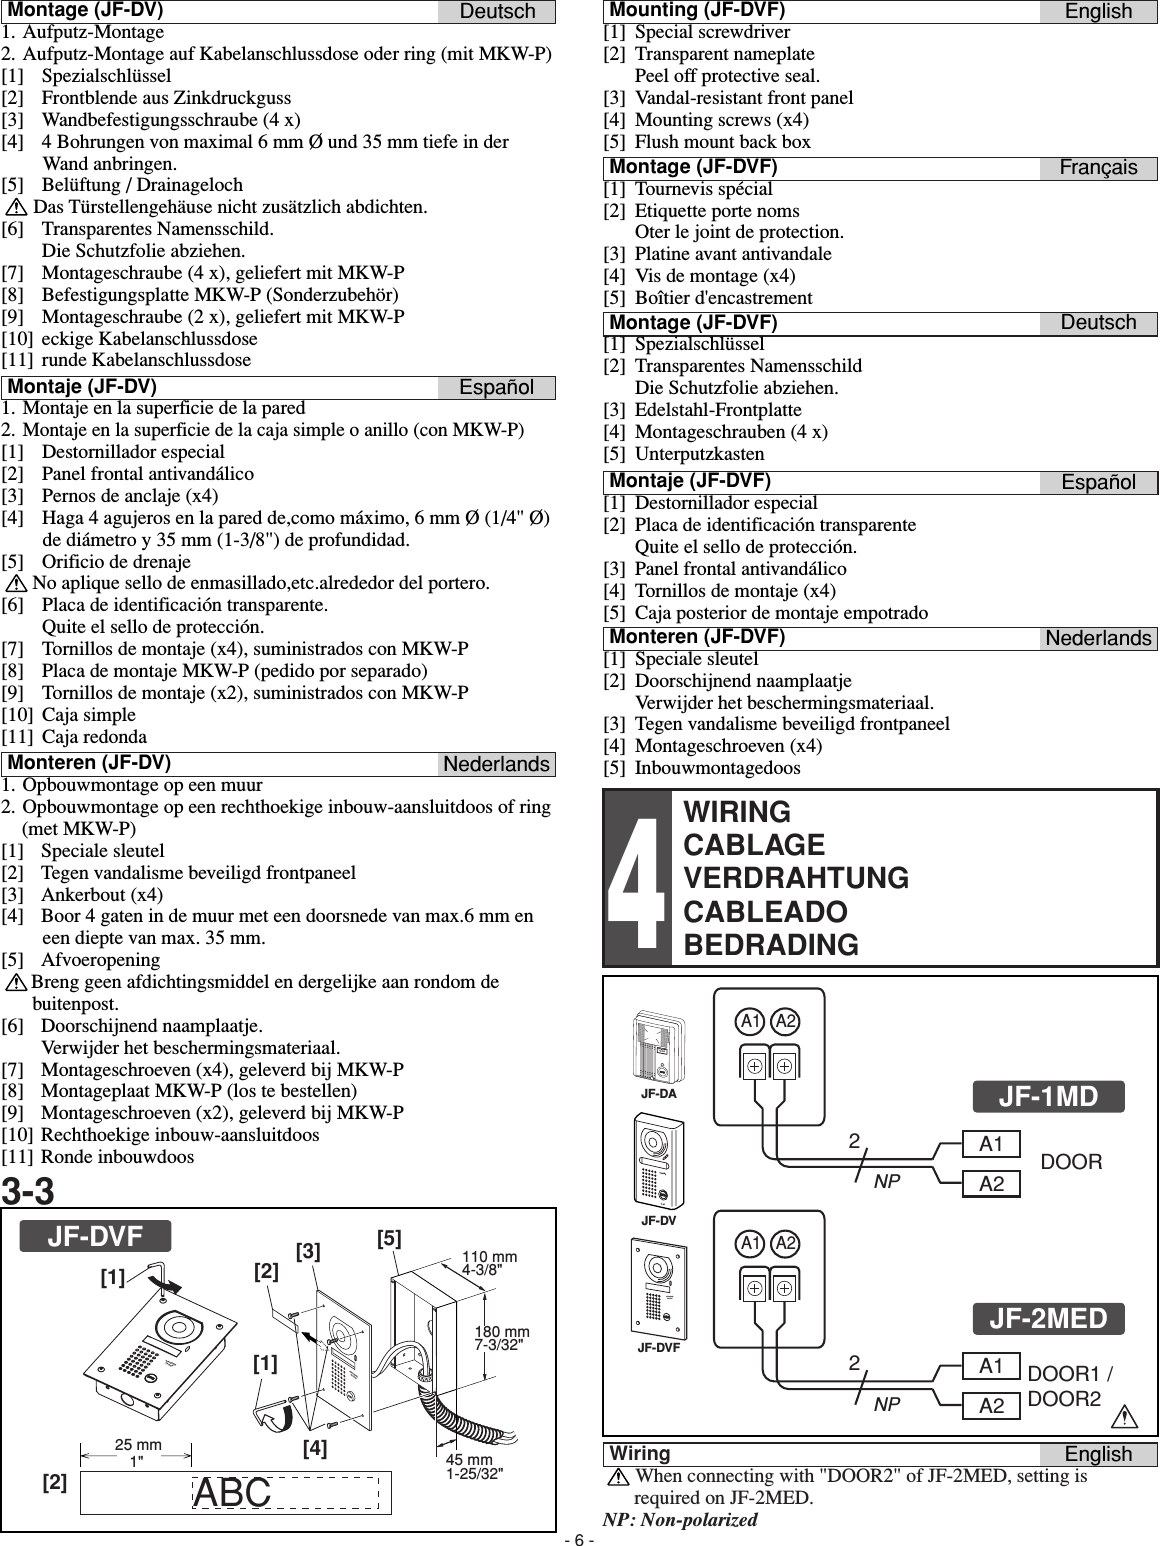 Page 6 of 8 - Aiphone JF-DA_M JF-DA, JF-DV, JF-DVF Instructions JF-DA DV DVF Instr